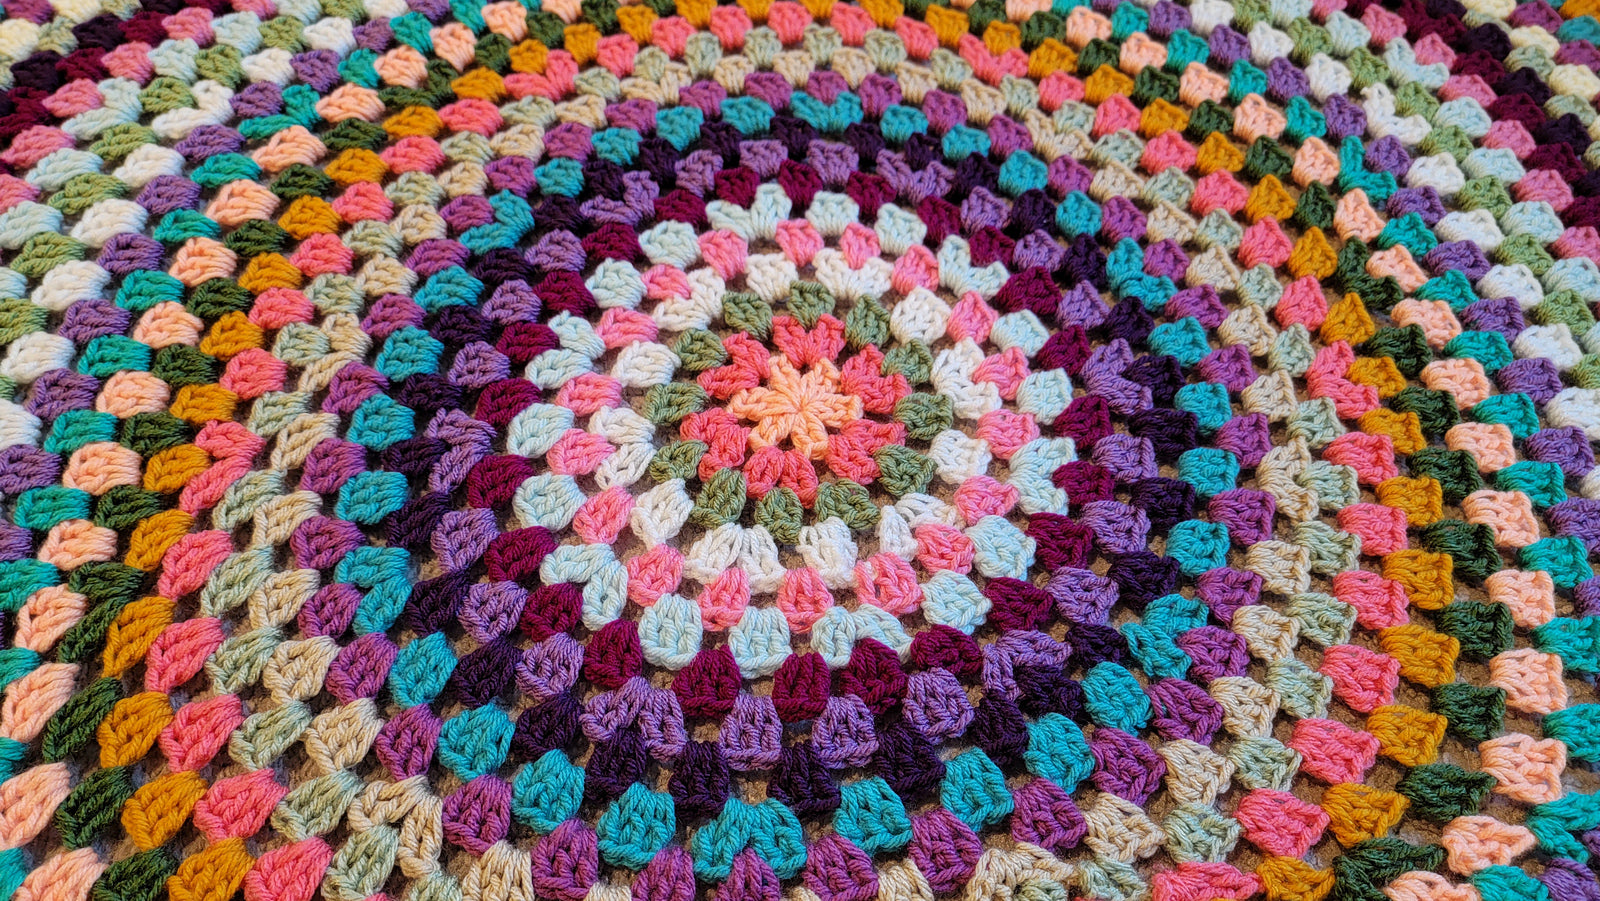 Afghan Crochet Patterns